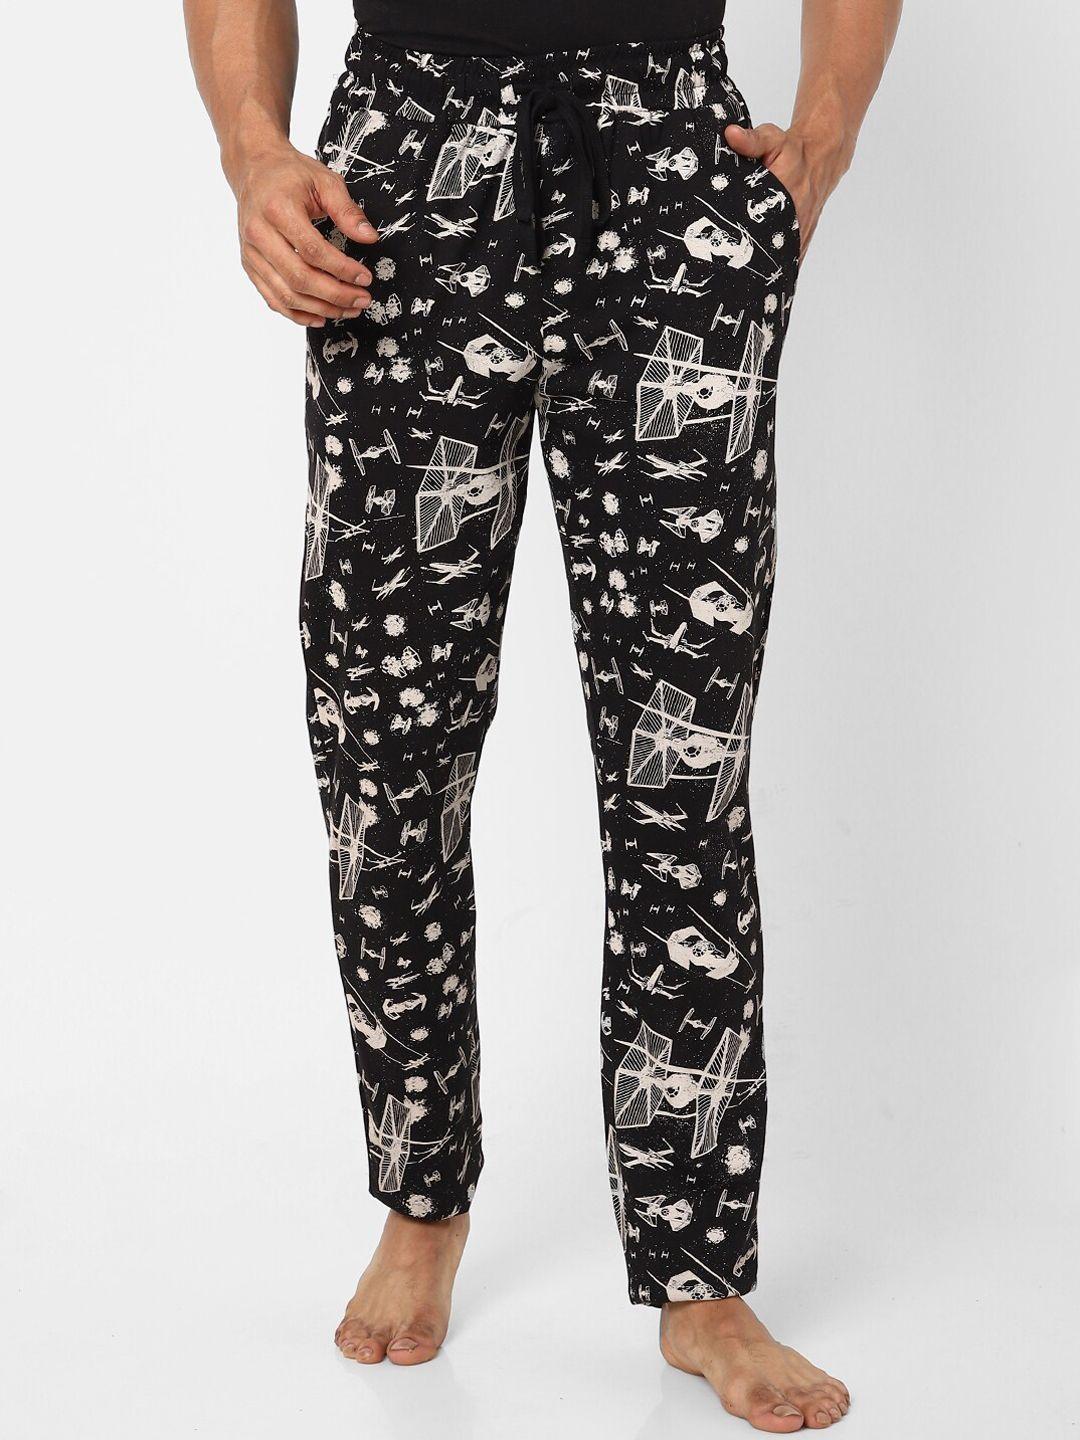 ajile by pantaloons men black & white printed lounge pants